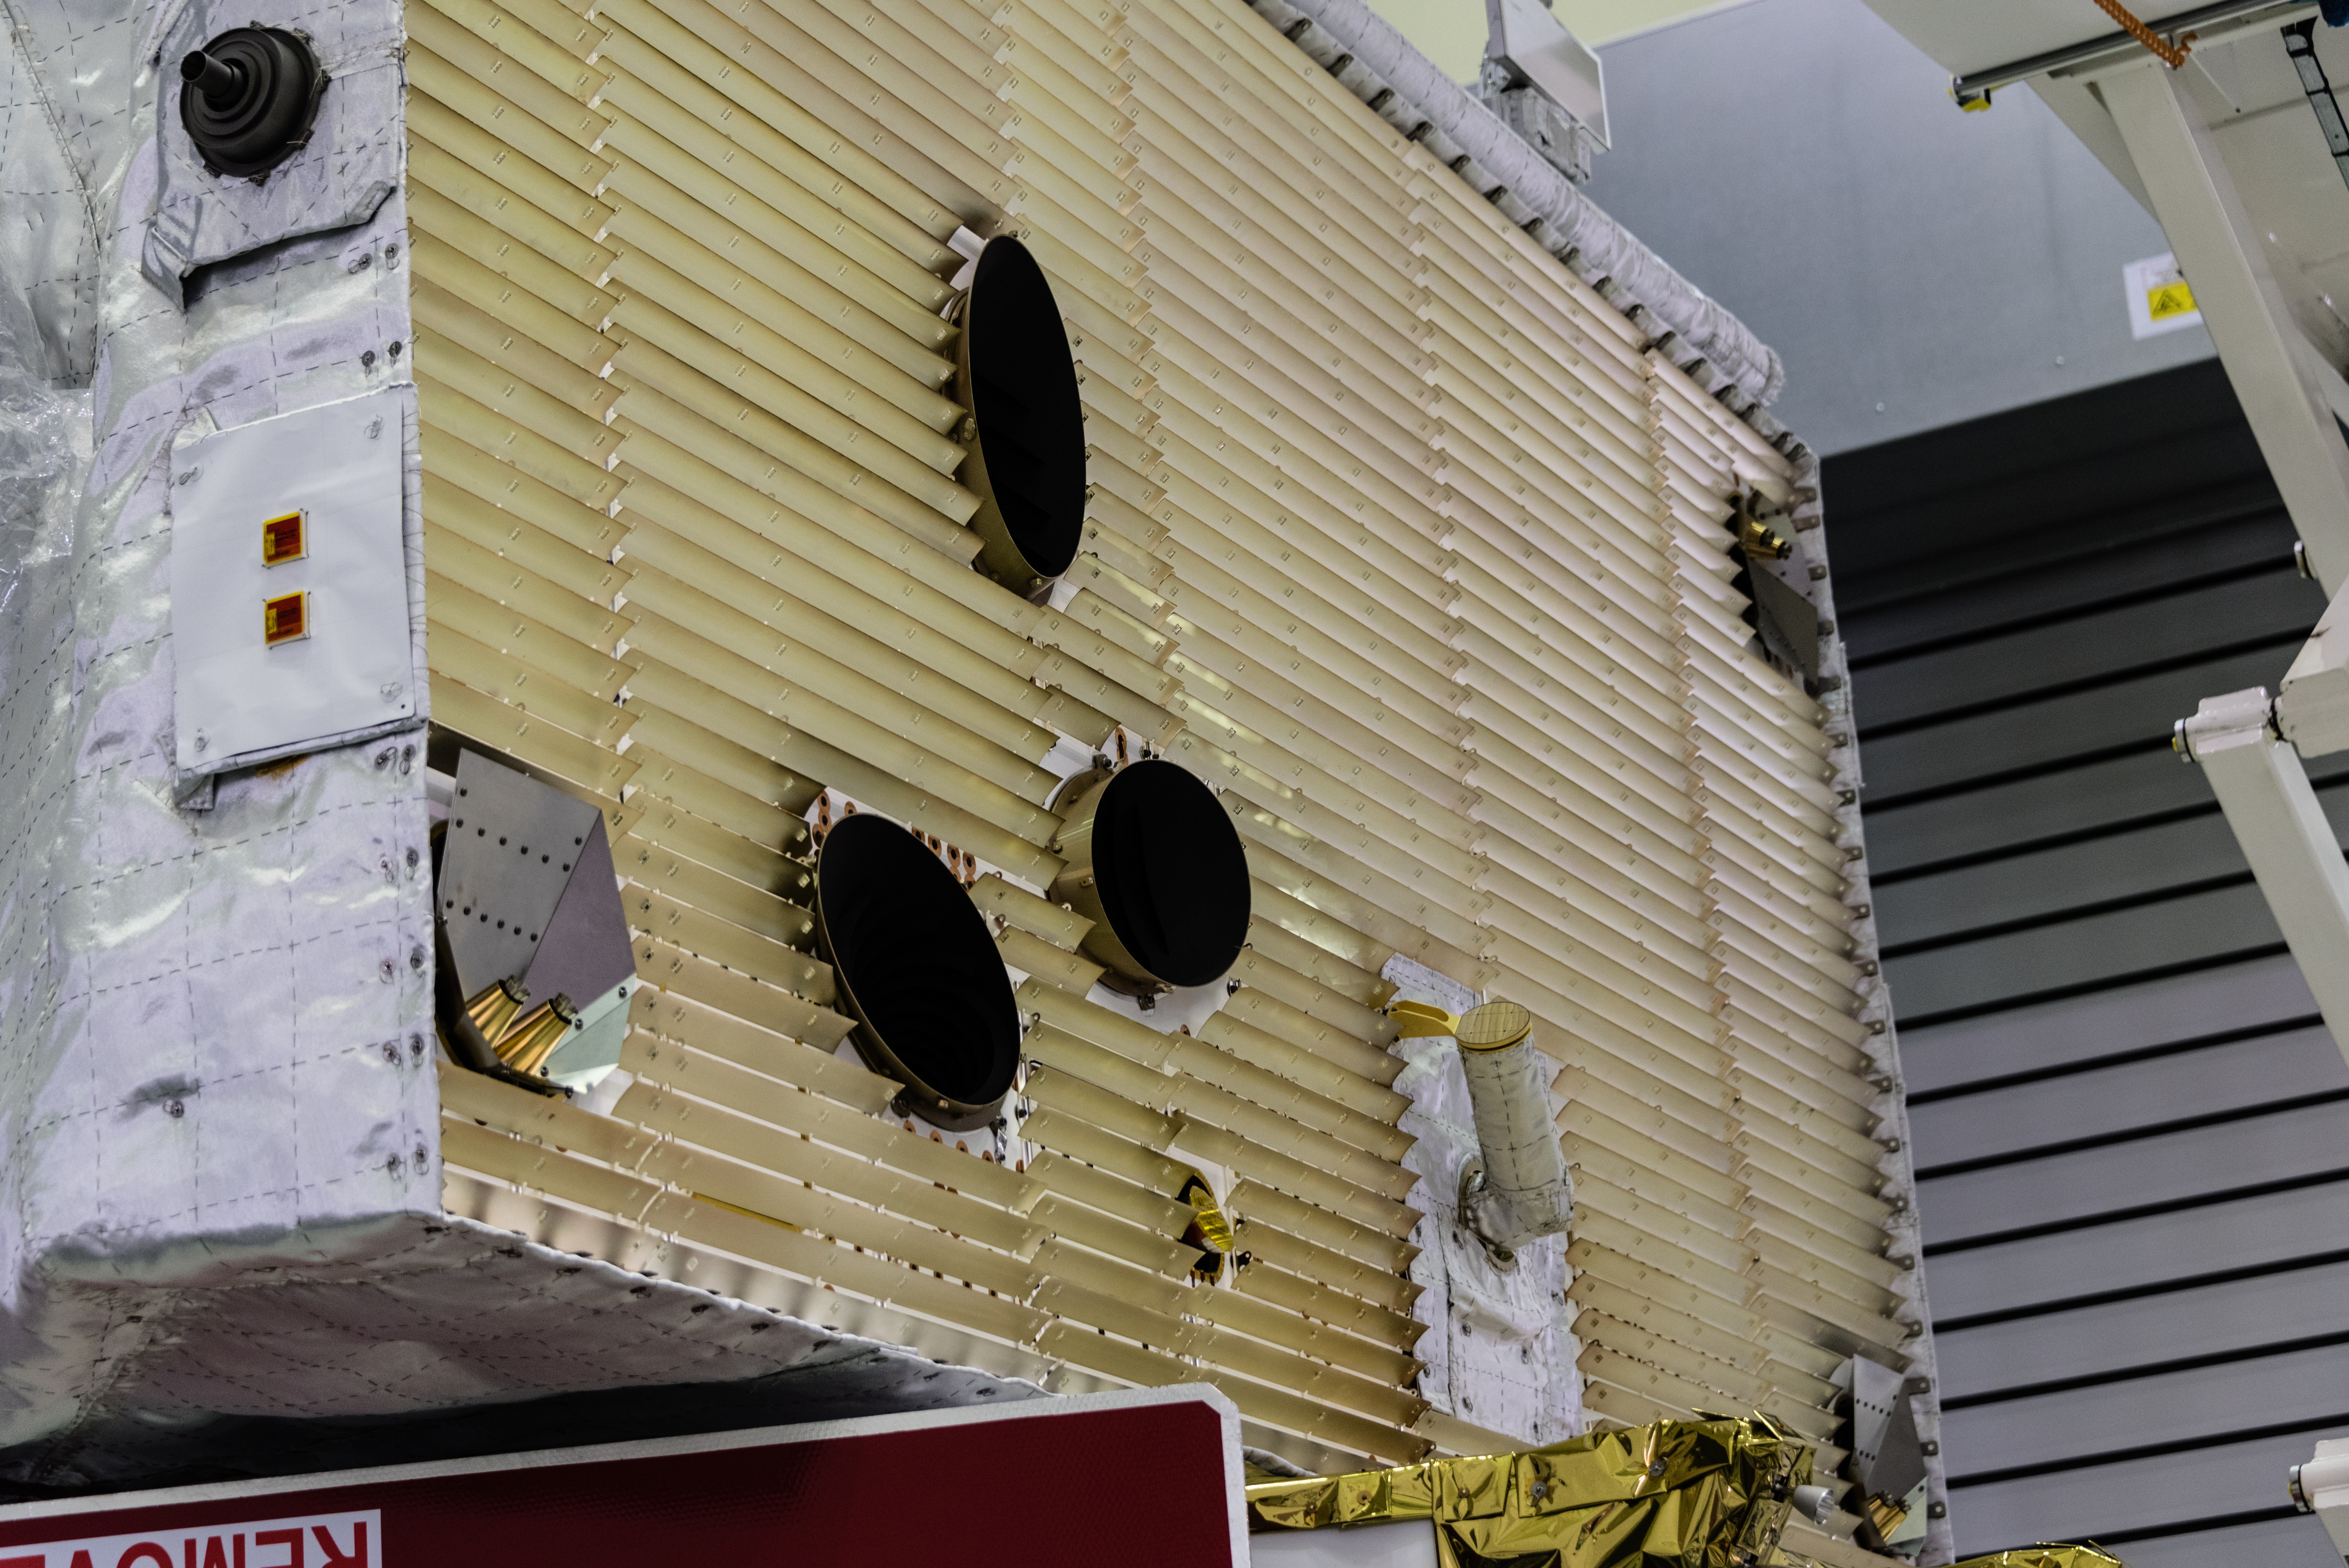 Mercury Planetary Orbiter radiator panel